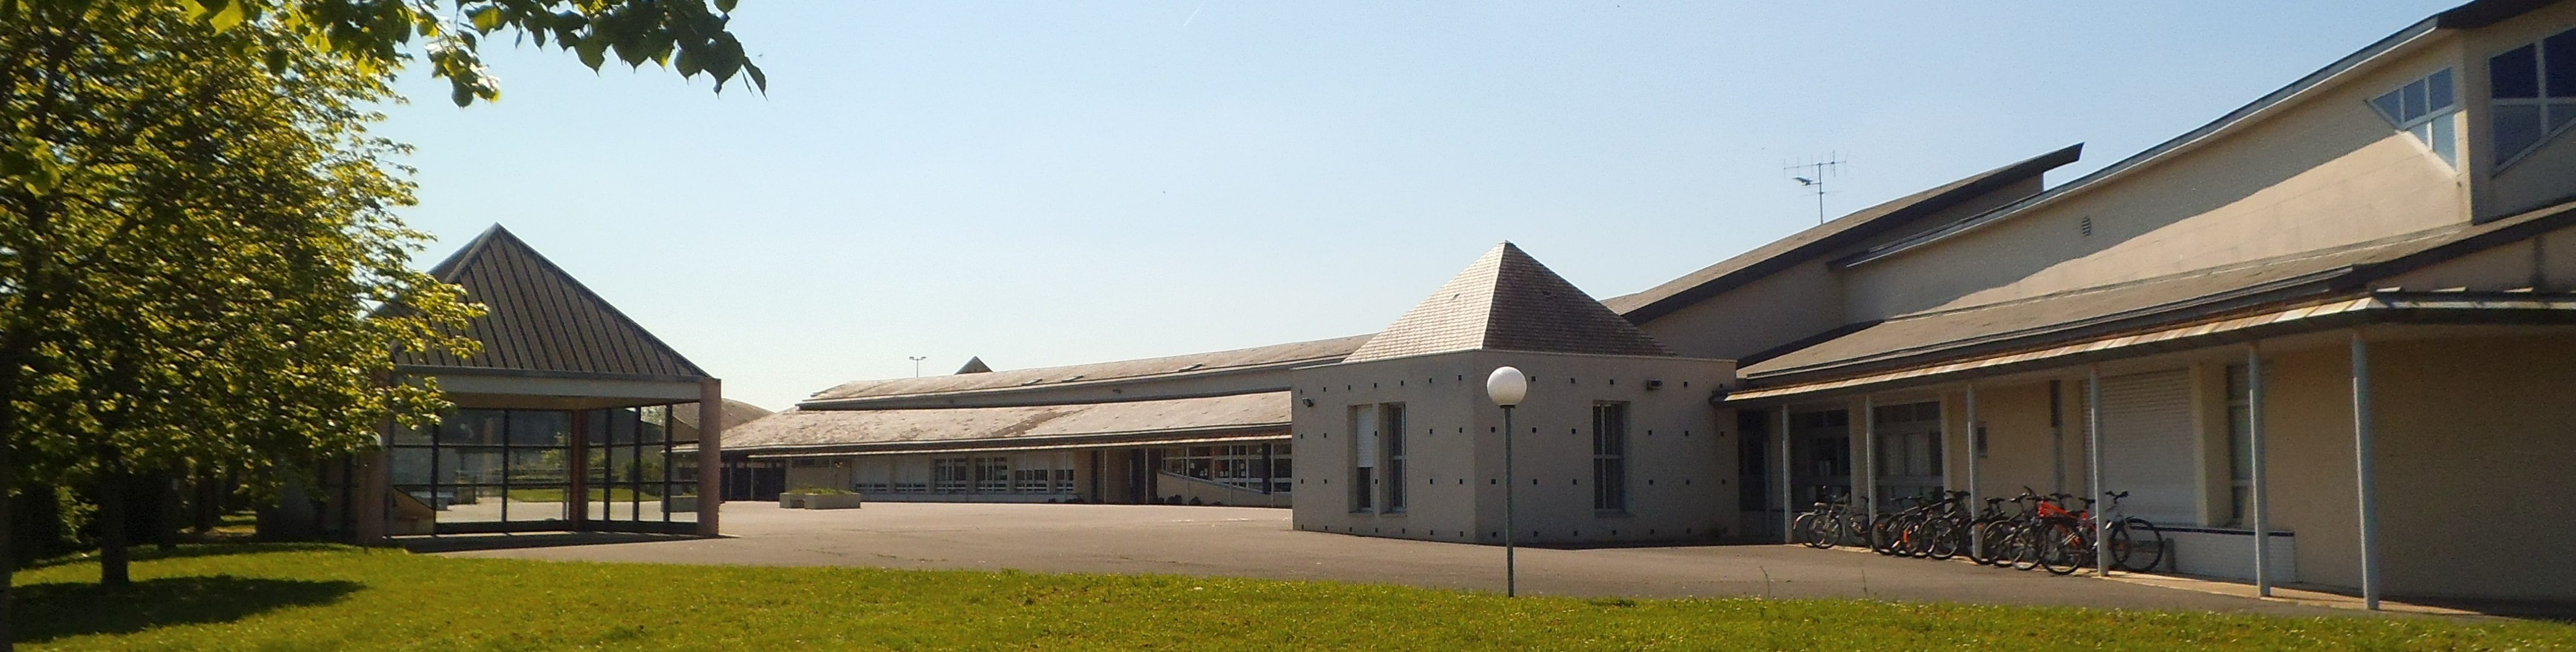 Collège Maryse Bastie  Collège  Ingrandes Sur Loire